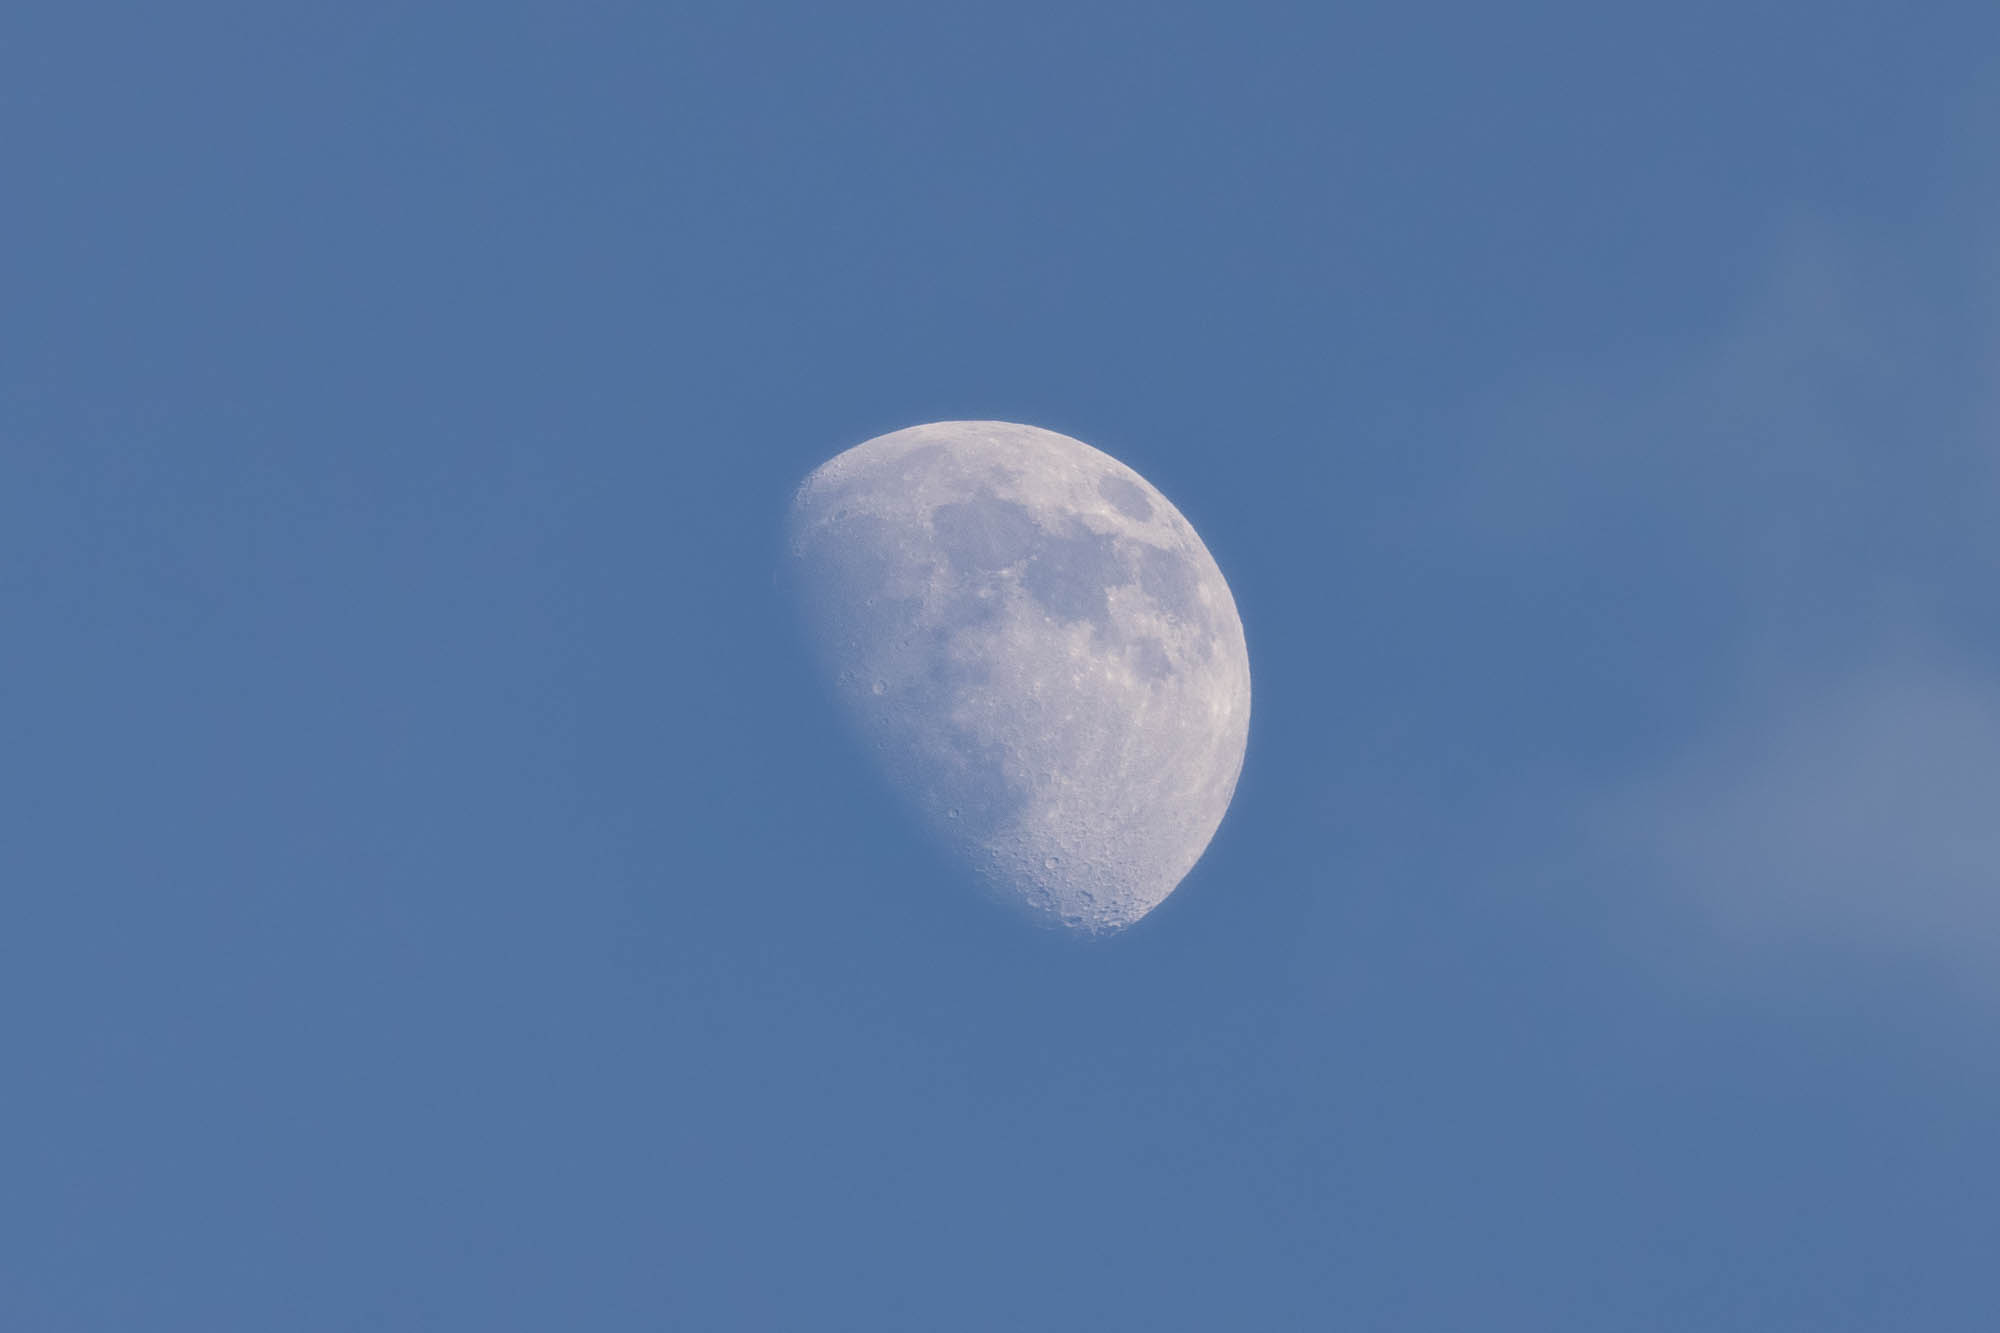 Moon in the blue sky. 69.5% illuminated